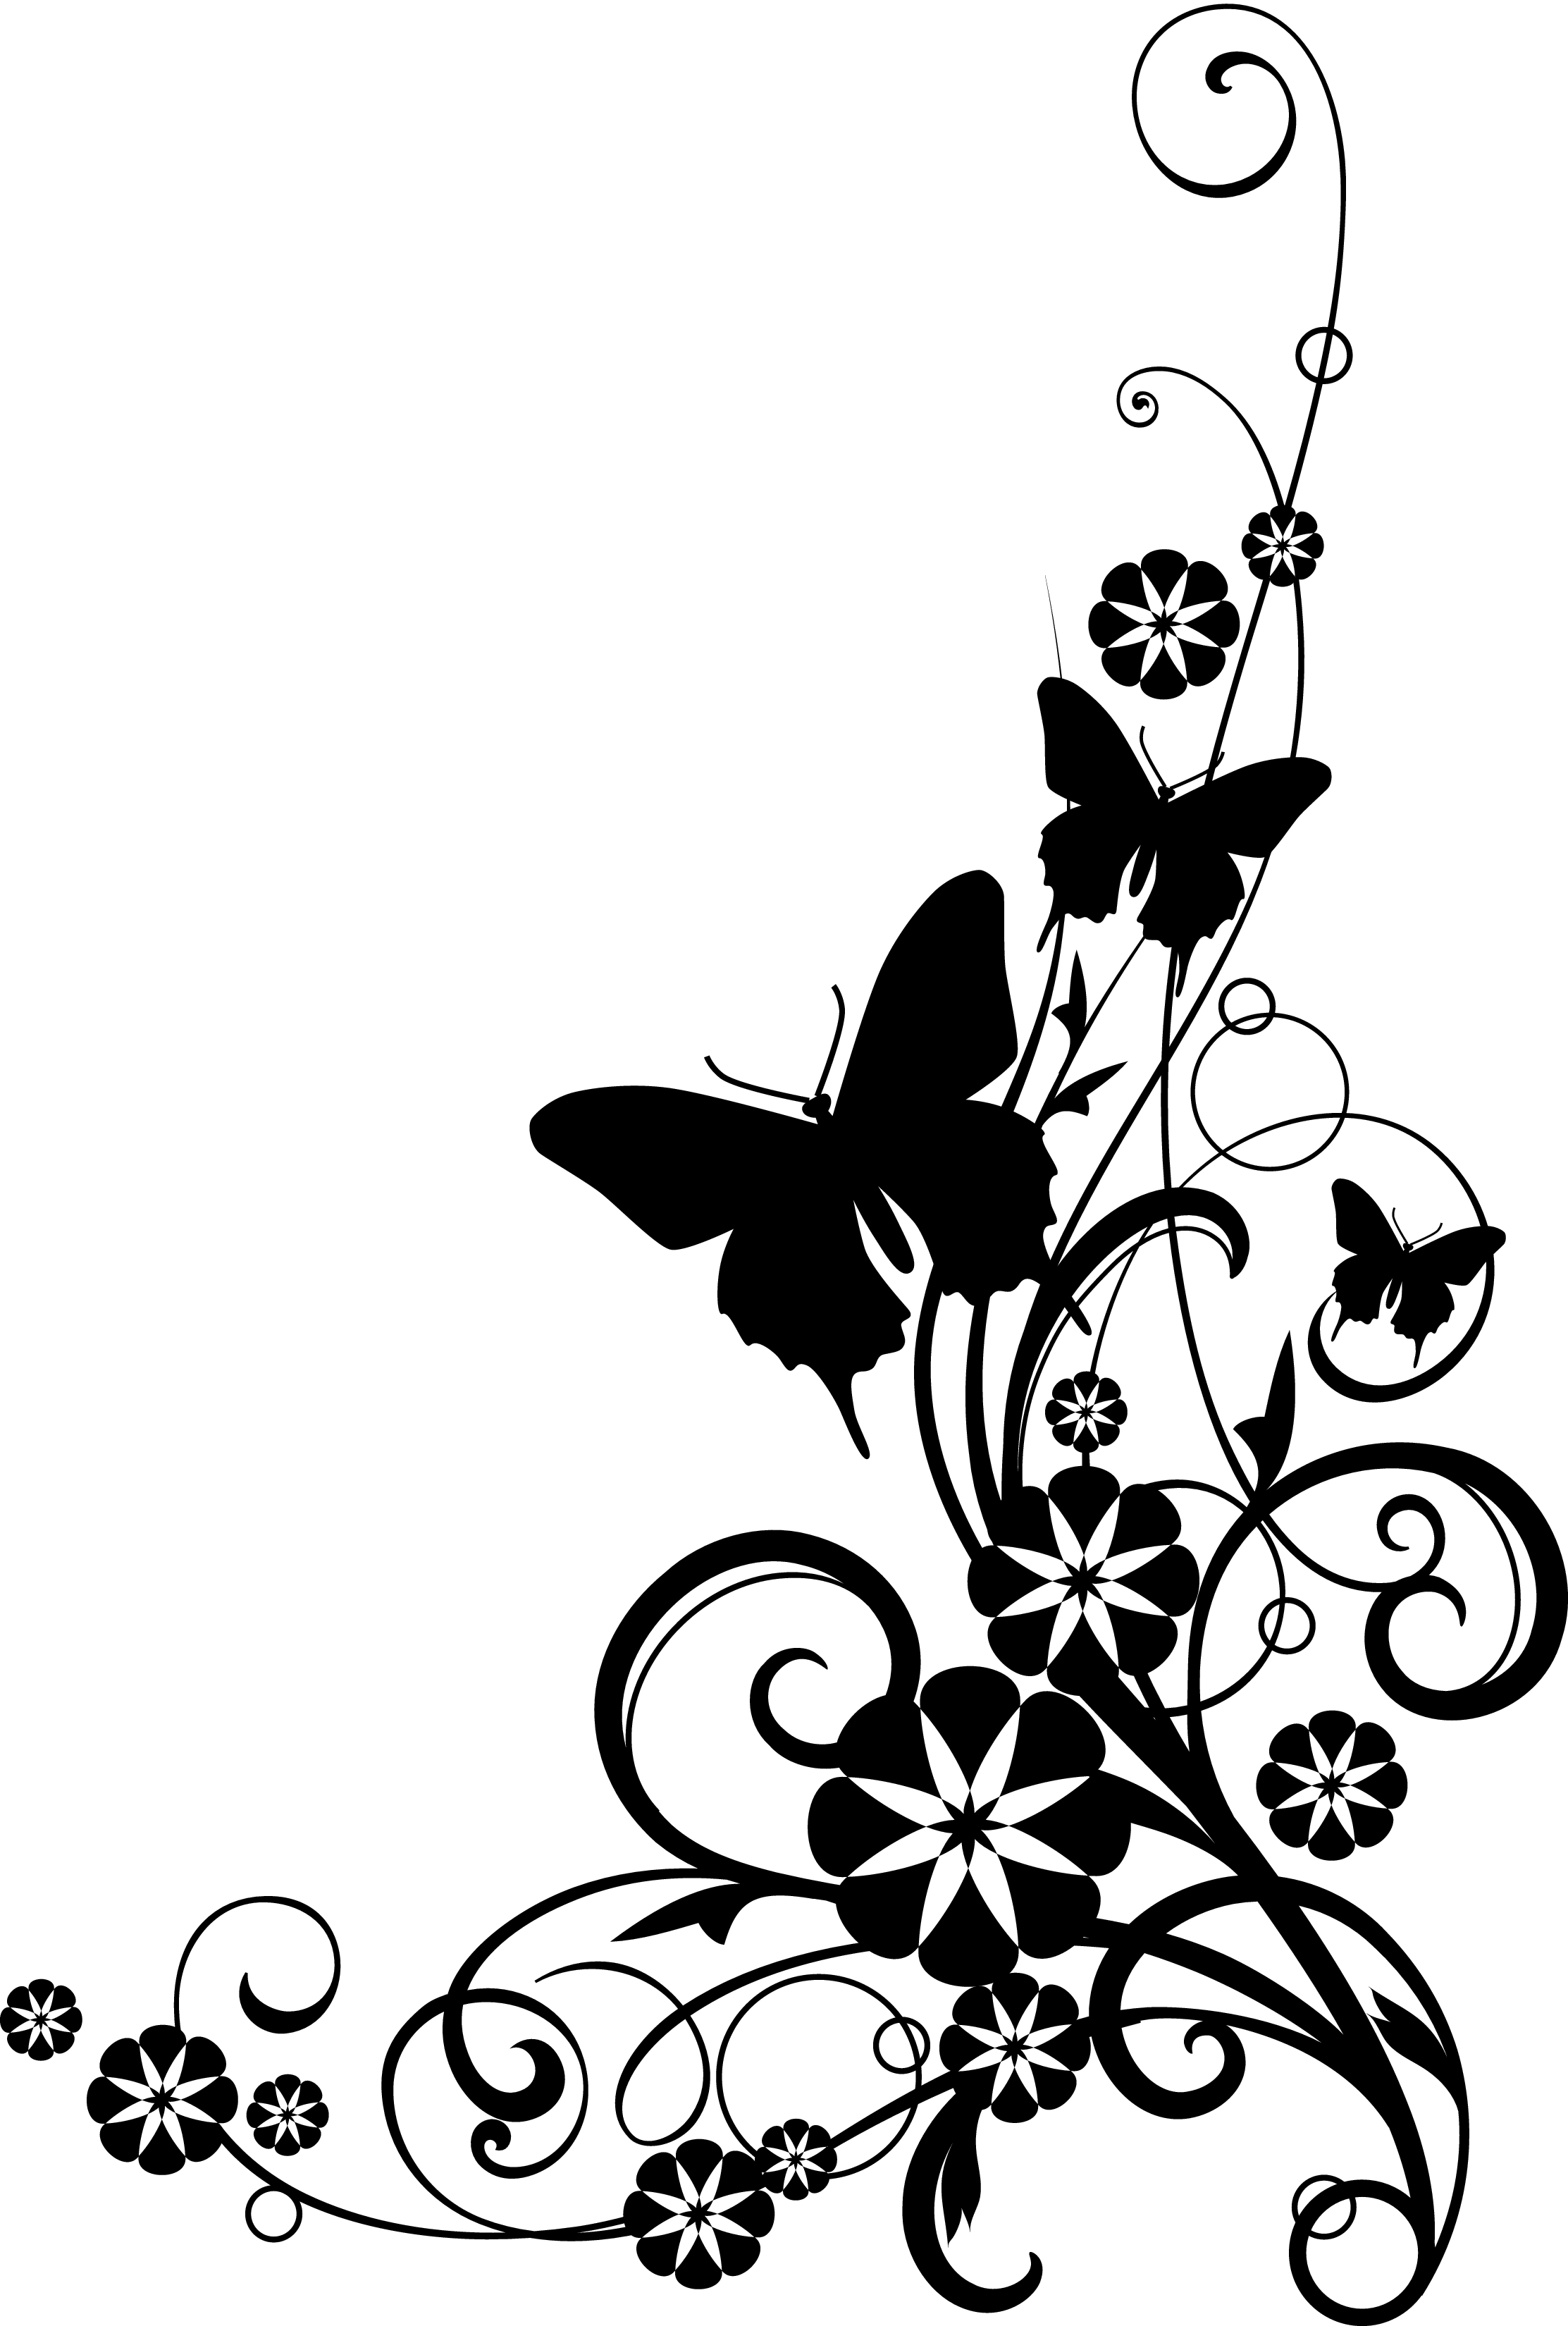 designs black and white border